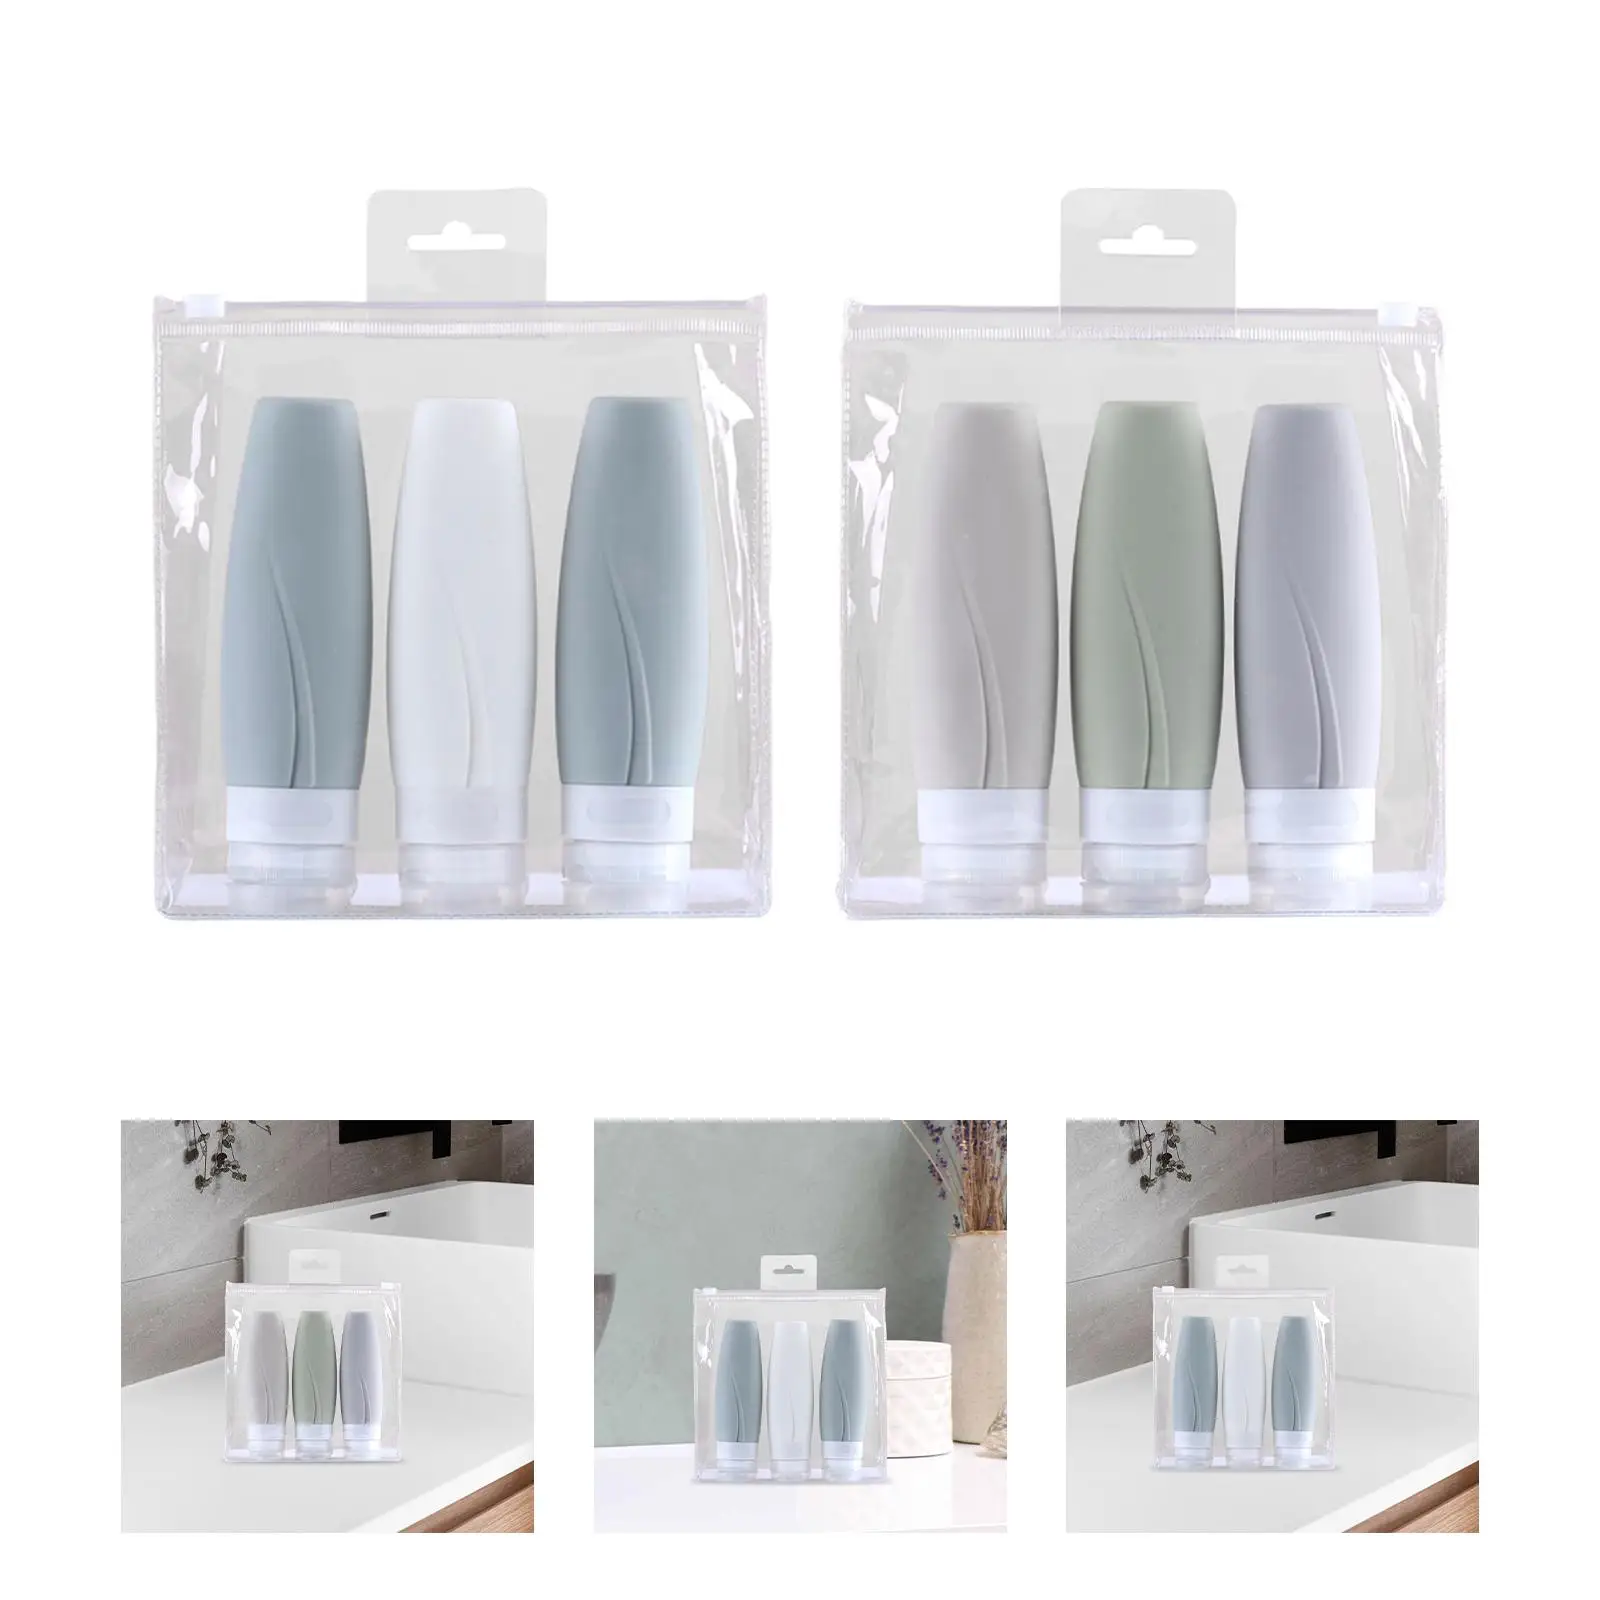 3x Silicone Travel Bottles Shampoo Tube Kits Liquid Container Organizer Storage Bottle for Cream Conditioner Shampoo Lotion Soap